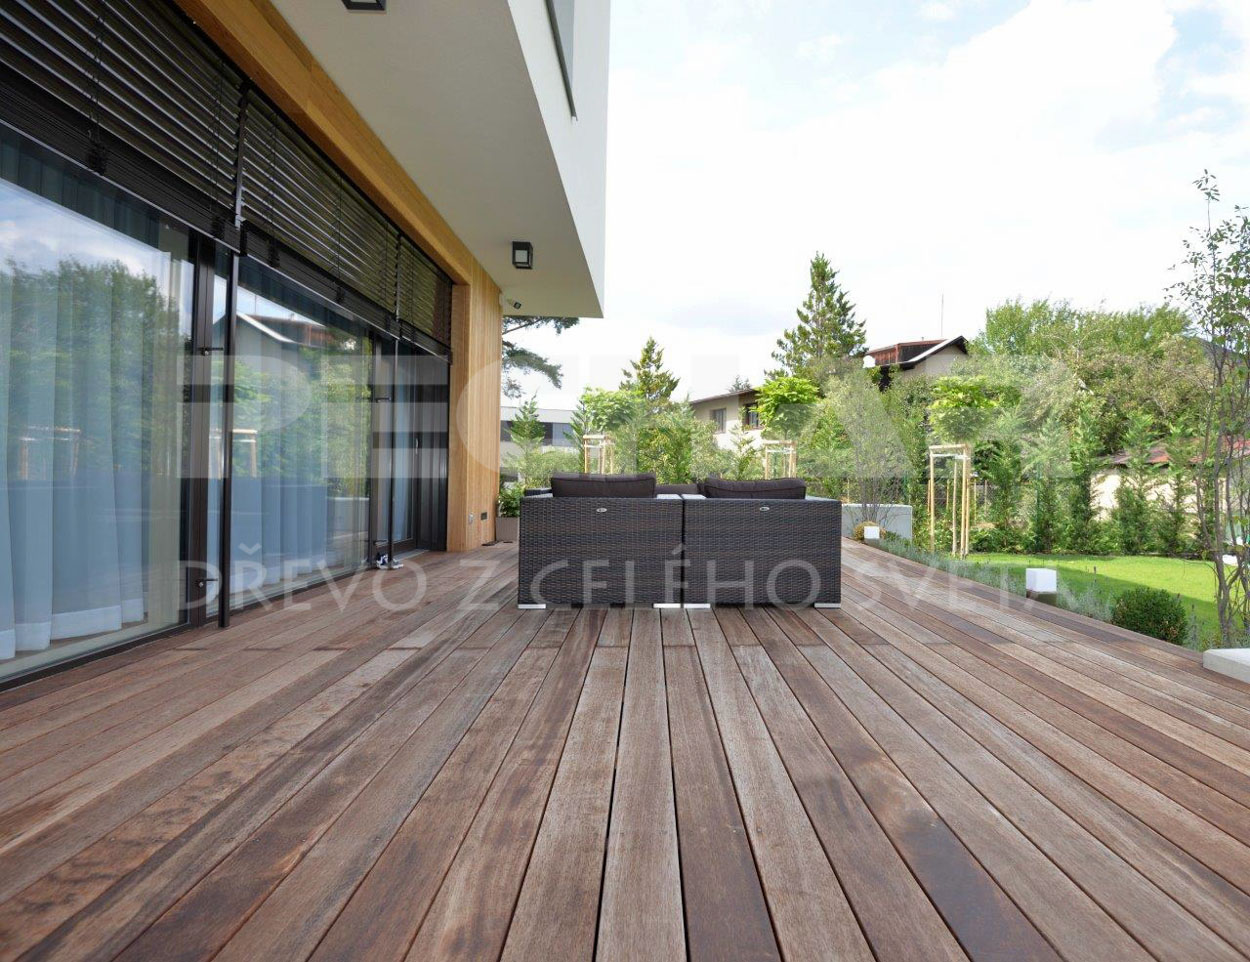 Merbau weathered wooden decking